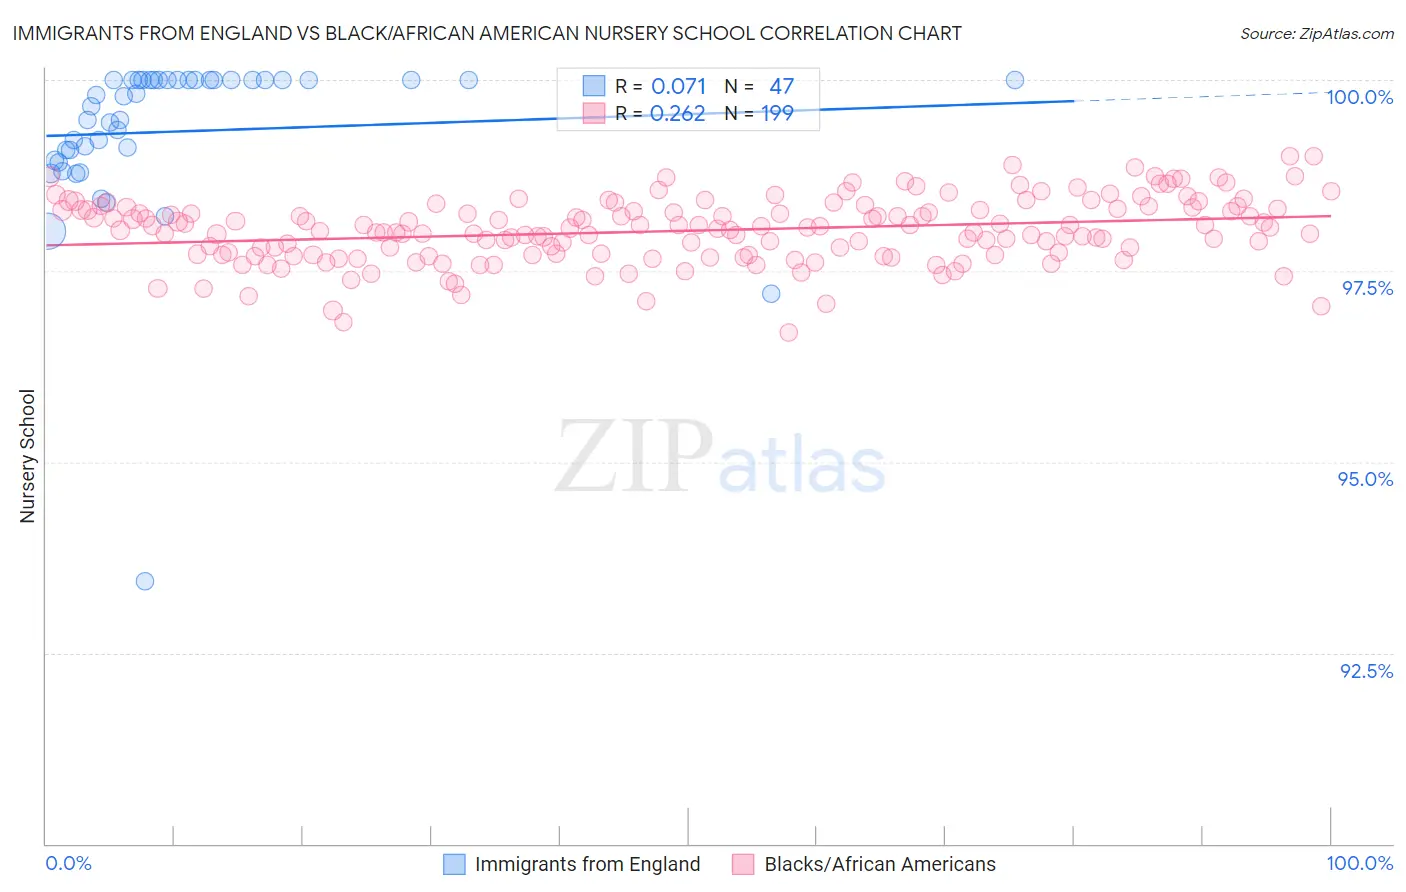 Immigrants from England vs Black/African American Nursery School